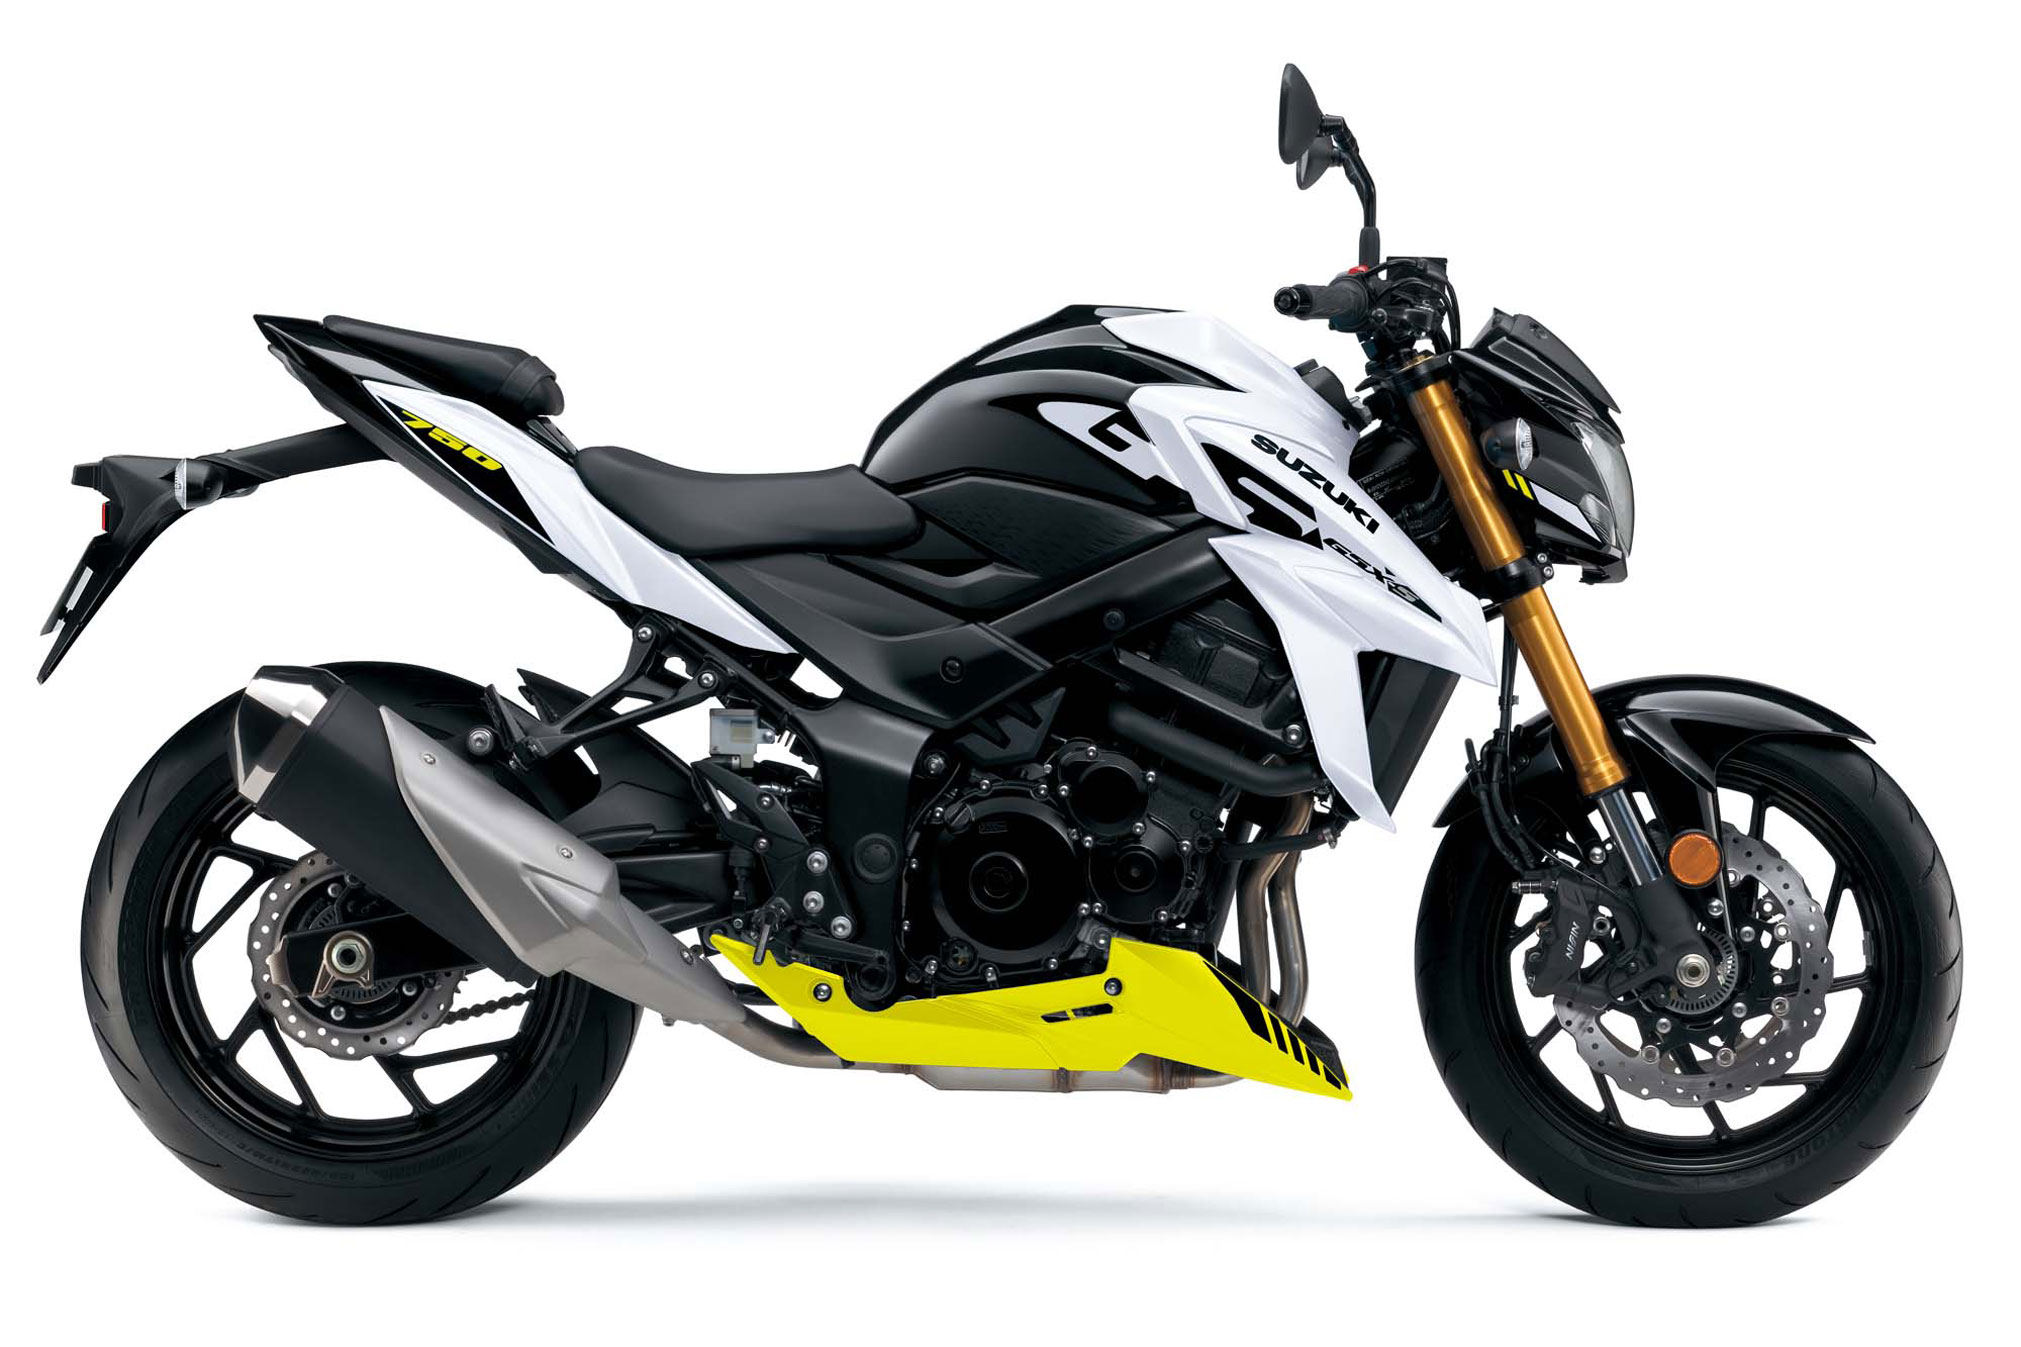 2021 Suzuki GSX-S750 Guide • Total Motorcycle